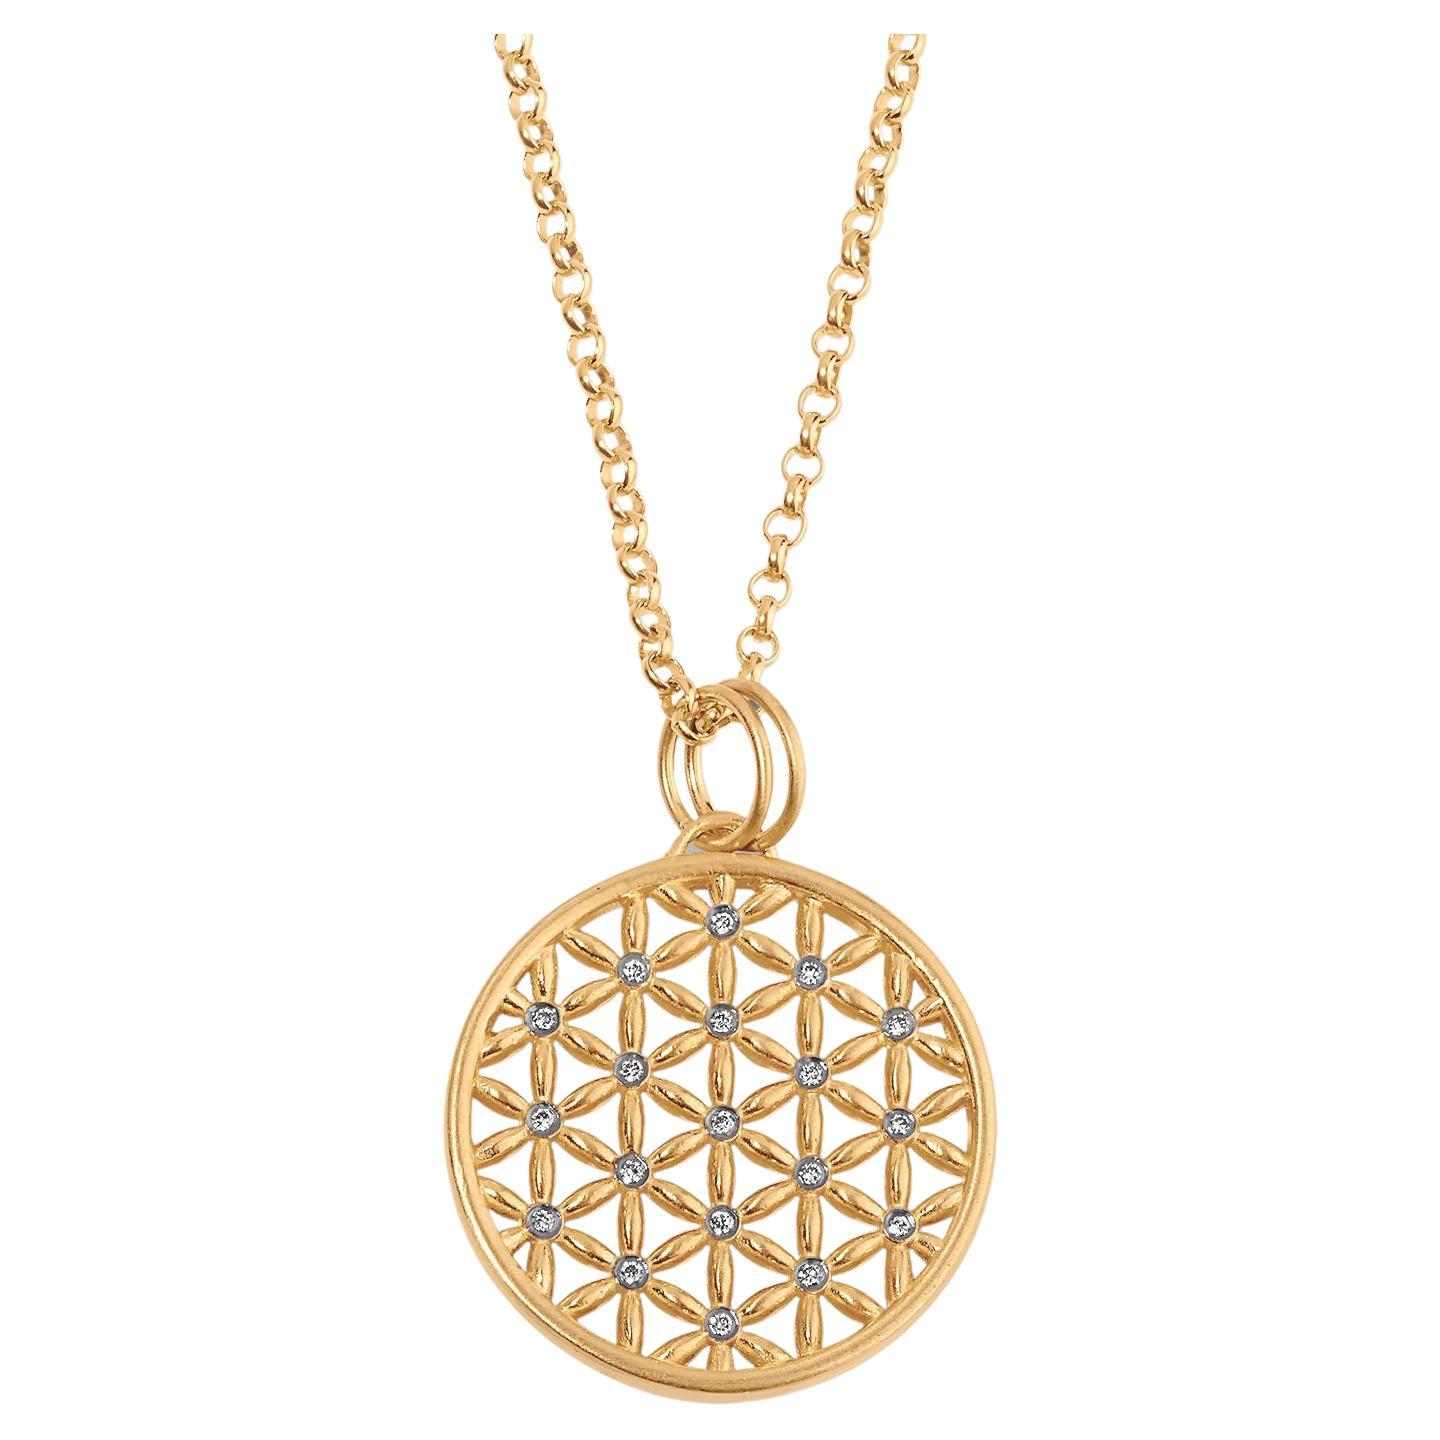 Hanedan Mandala Flower of Life Pendant with Diamonds 24kt Yellow Gold & Diamonds